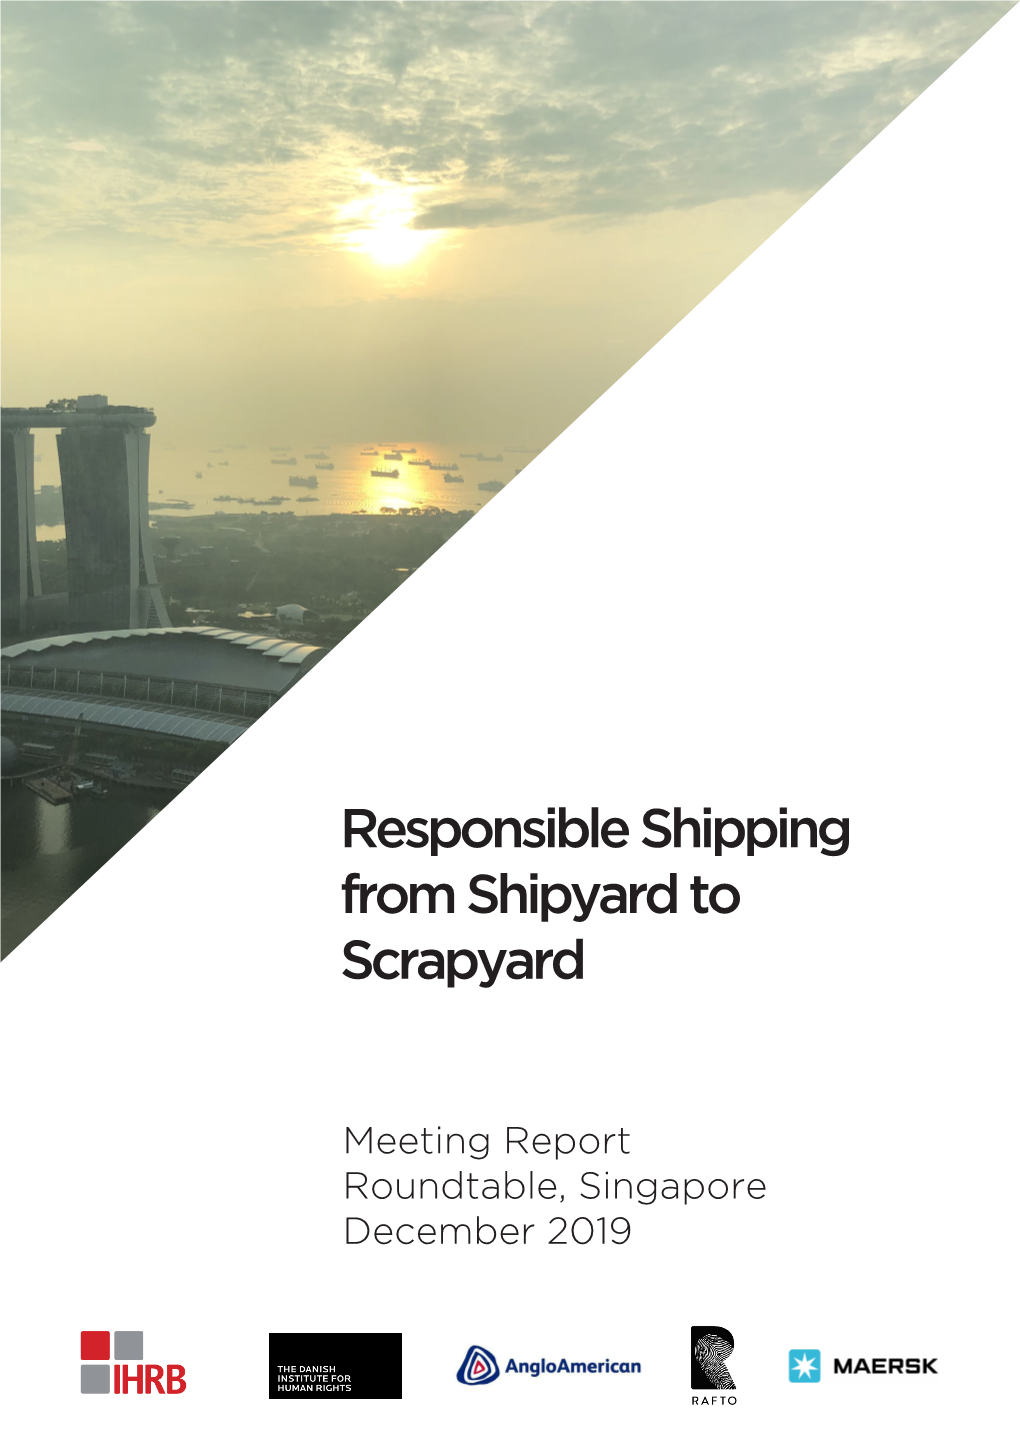 Responsible Shipping from Shipyard to Scrapyard, Dec 19